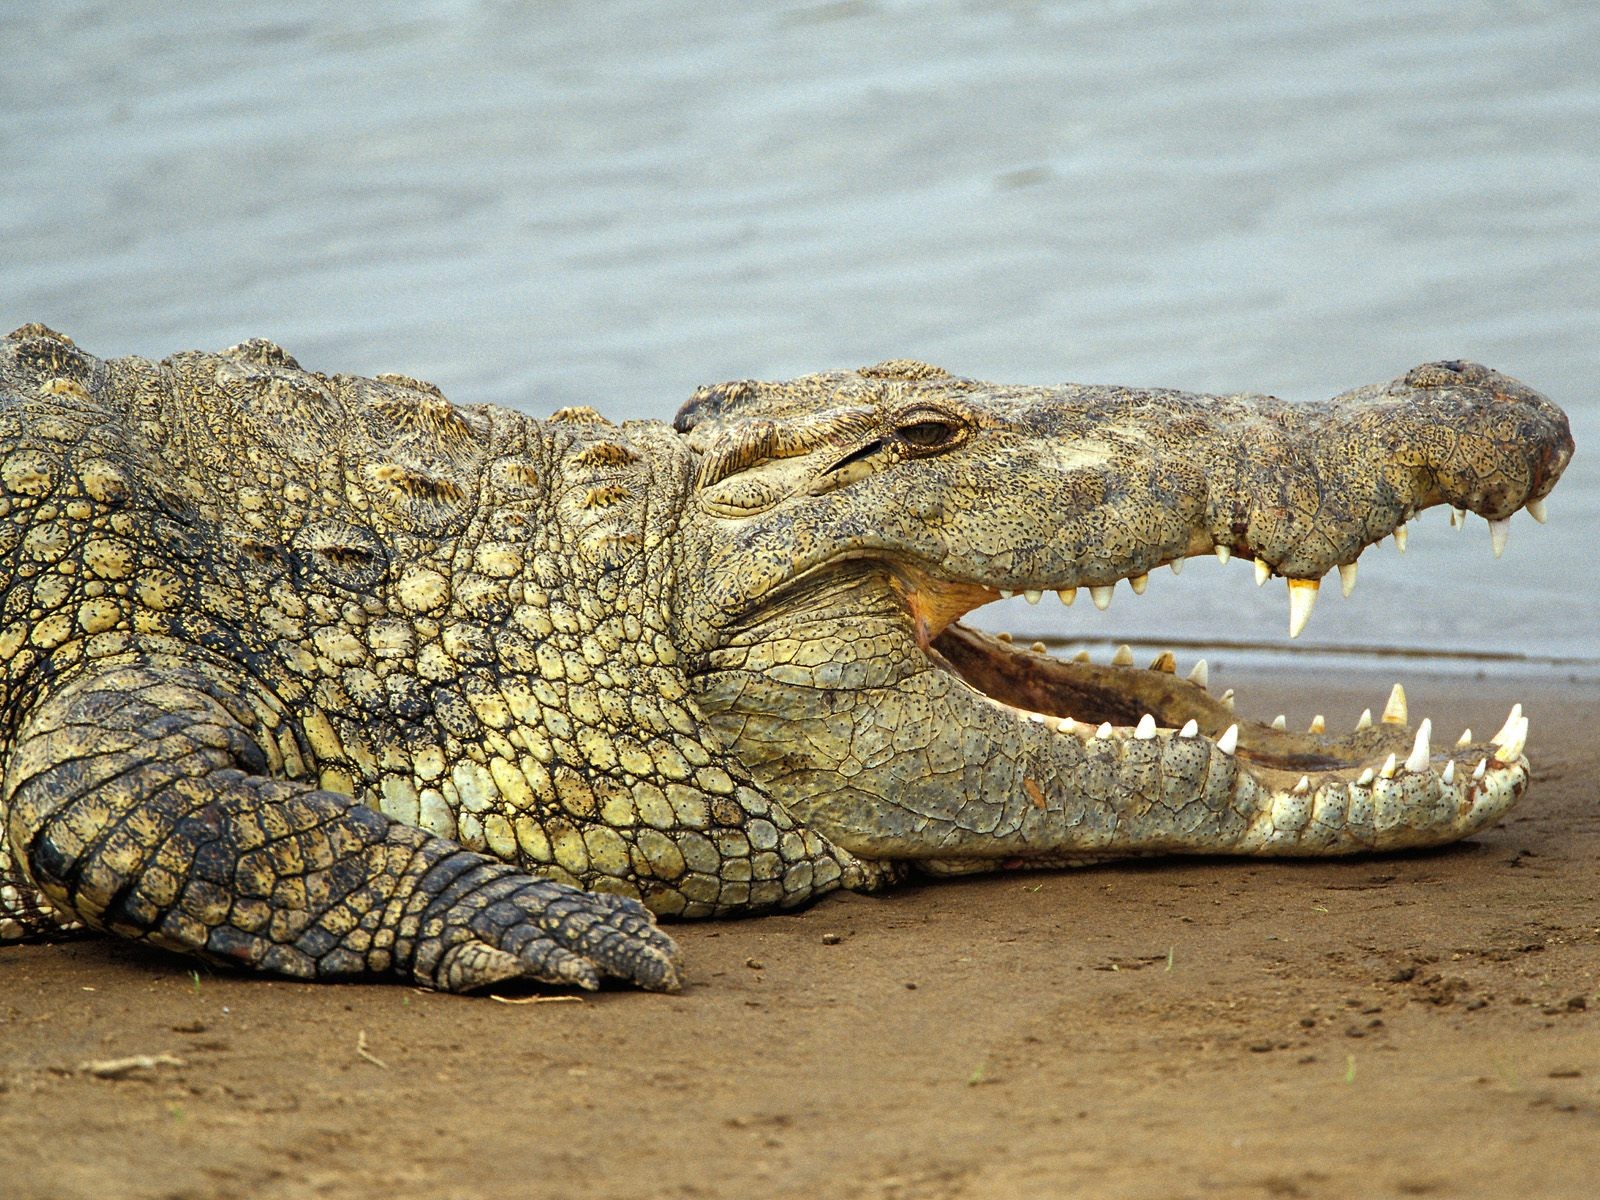 General 1600x1200 Africa nature animals crocodiles reptiles